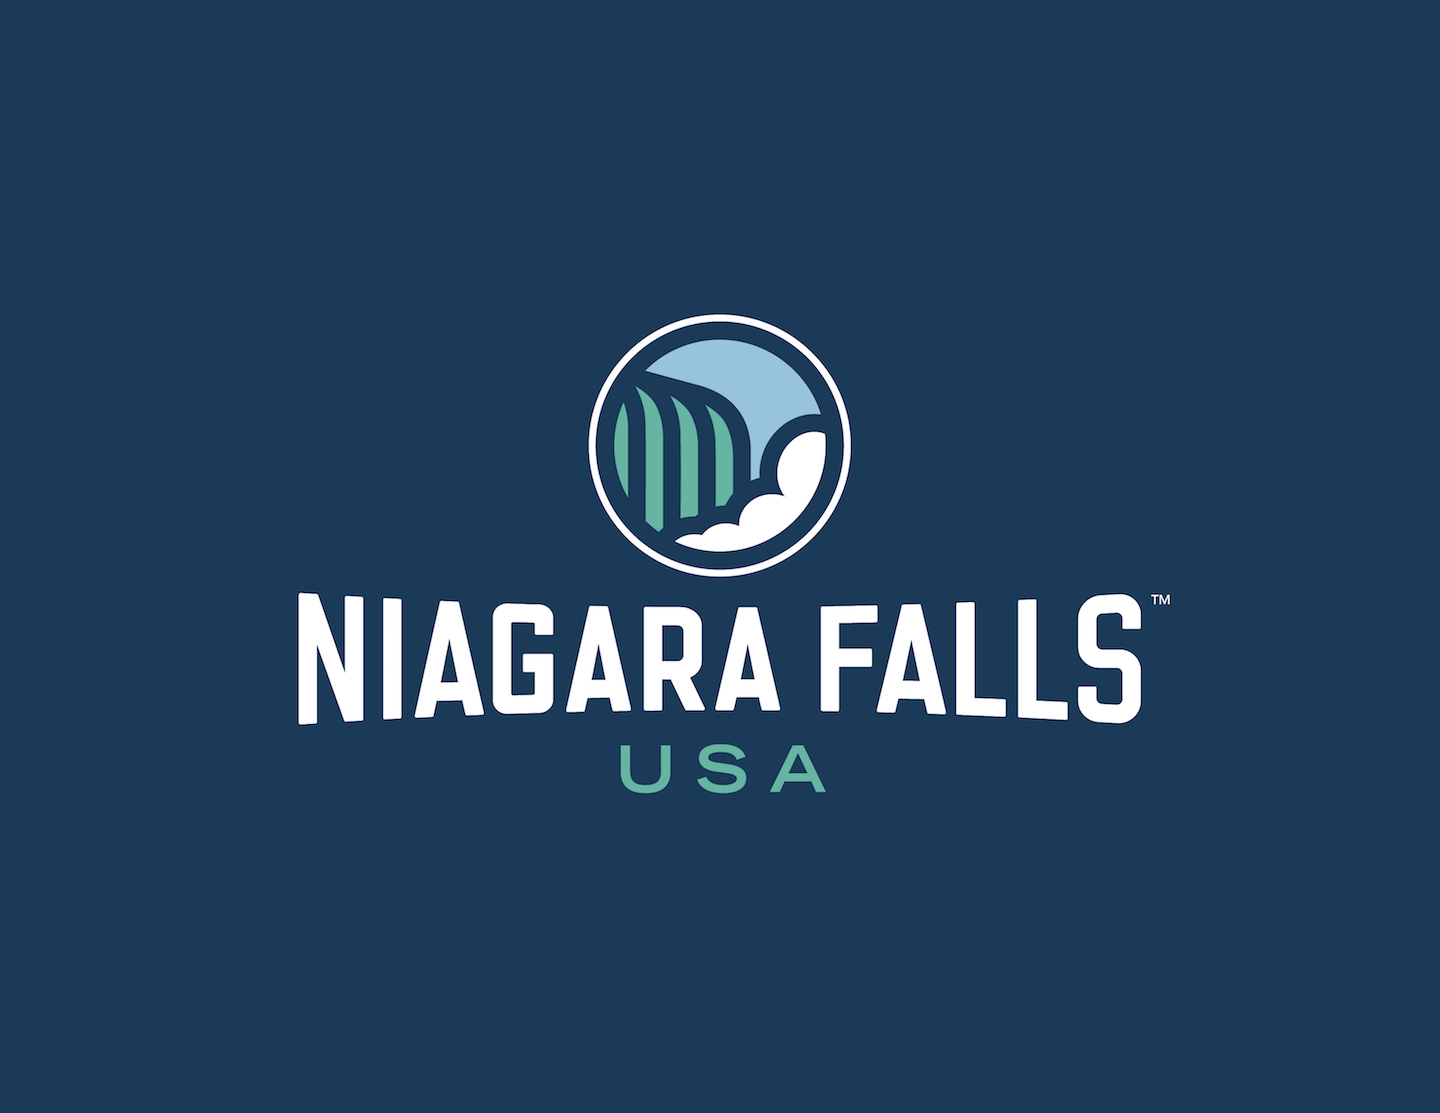 Destination Niagara USA logo (Submitted file photo)